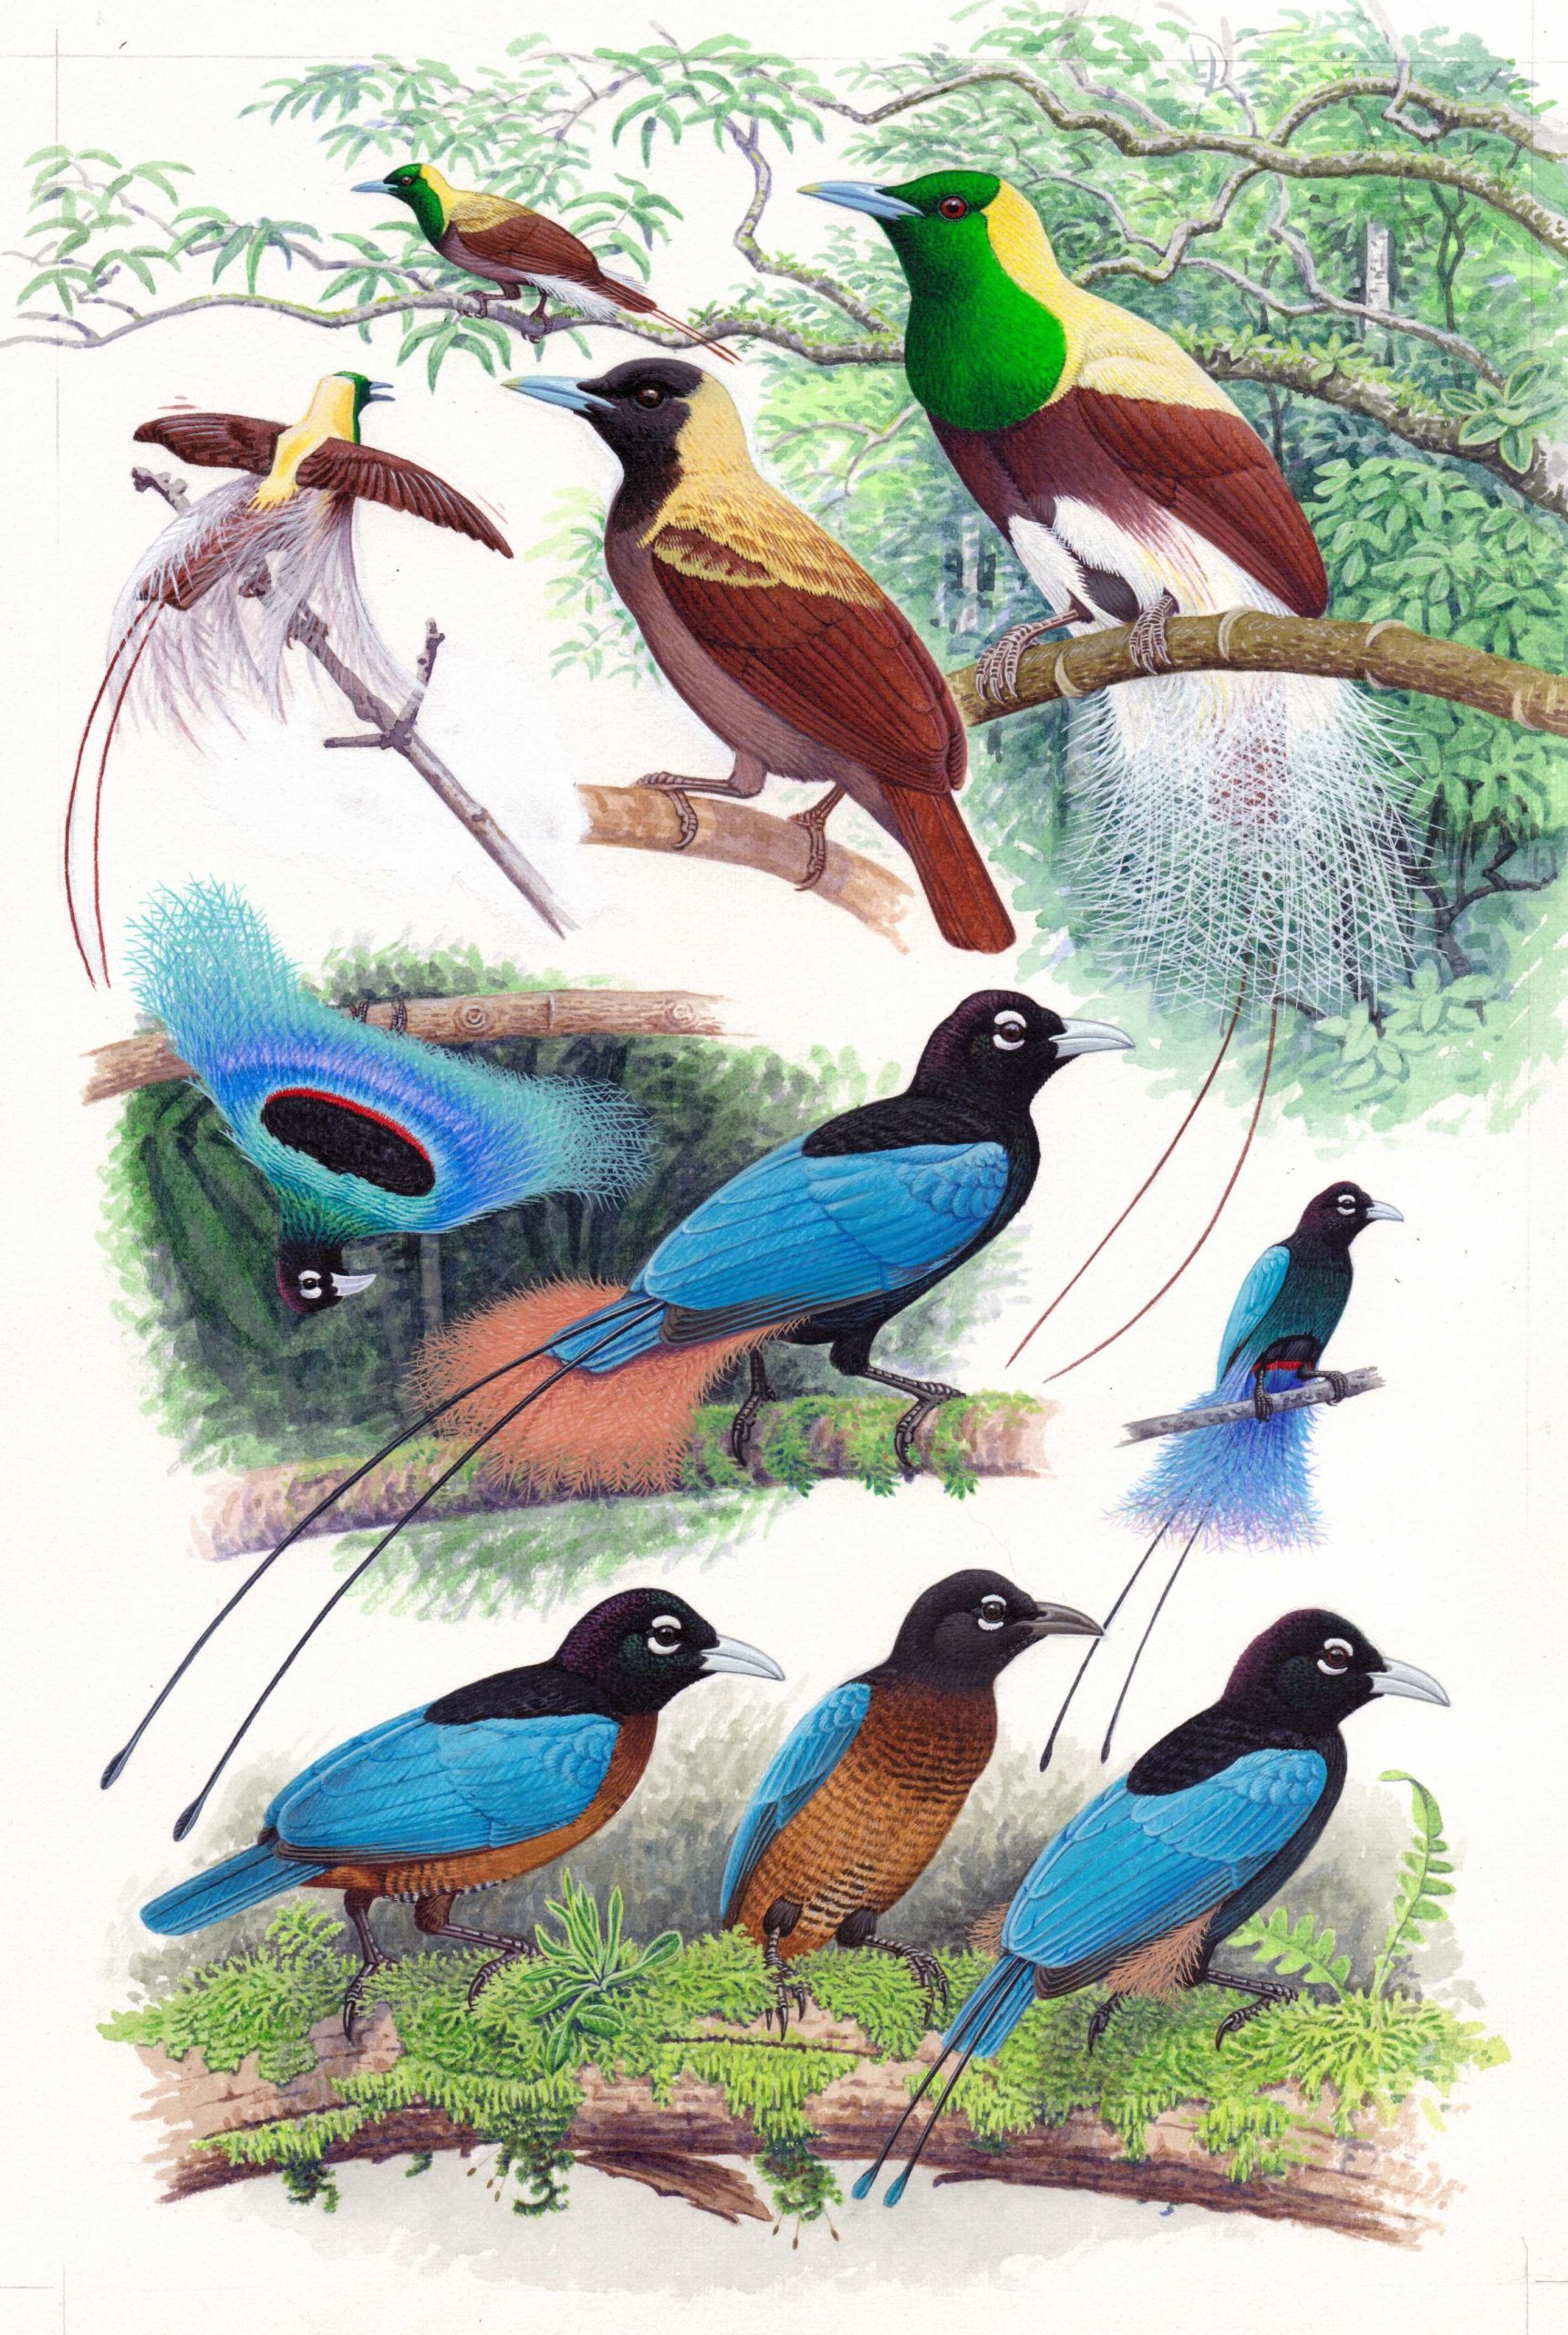 Emperor Bird of Paradise & Blue Bird of Paradise. Illustrations by